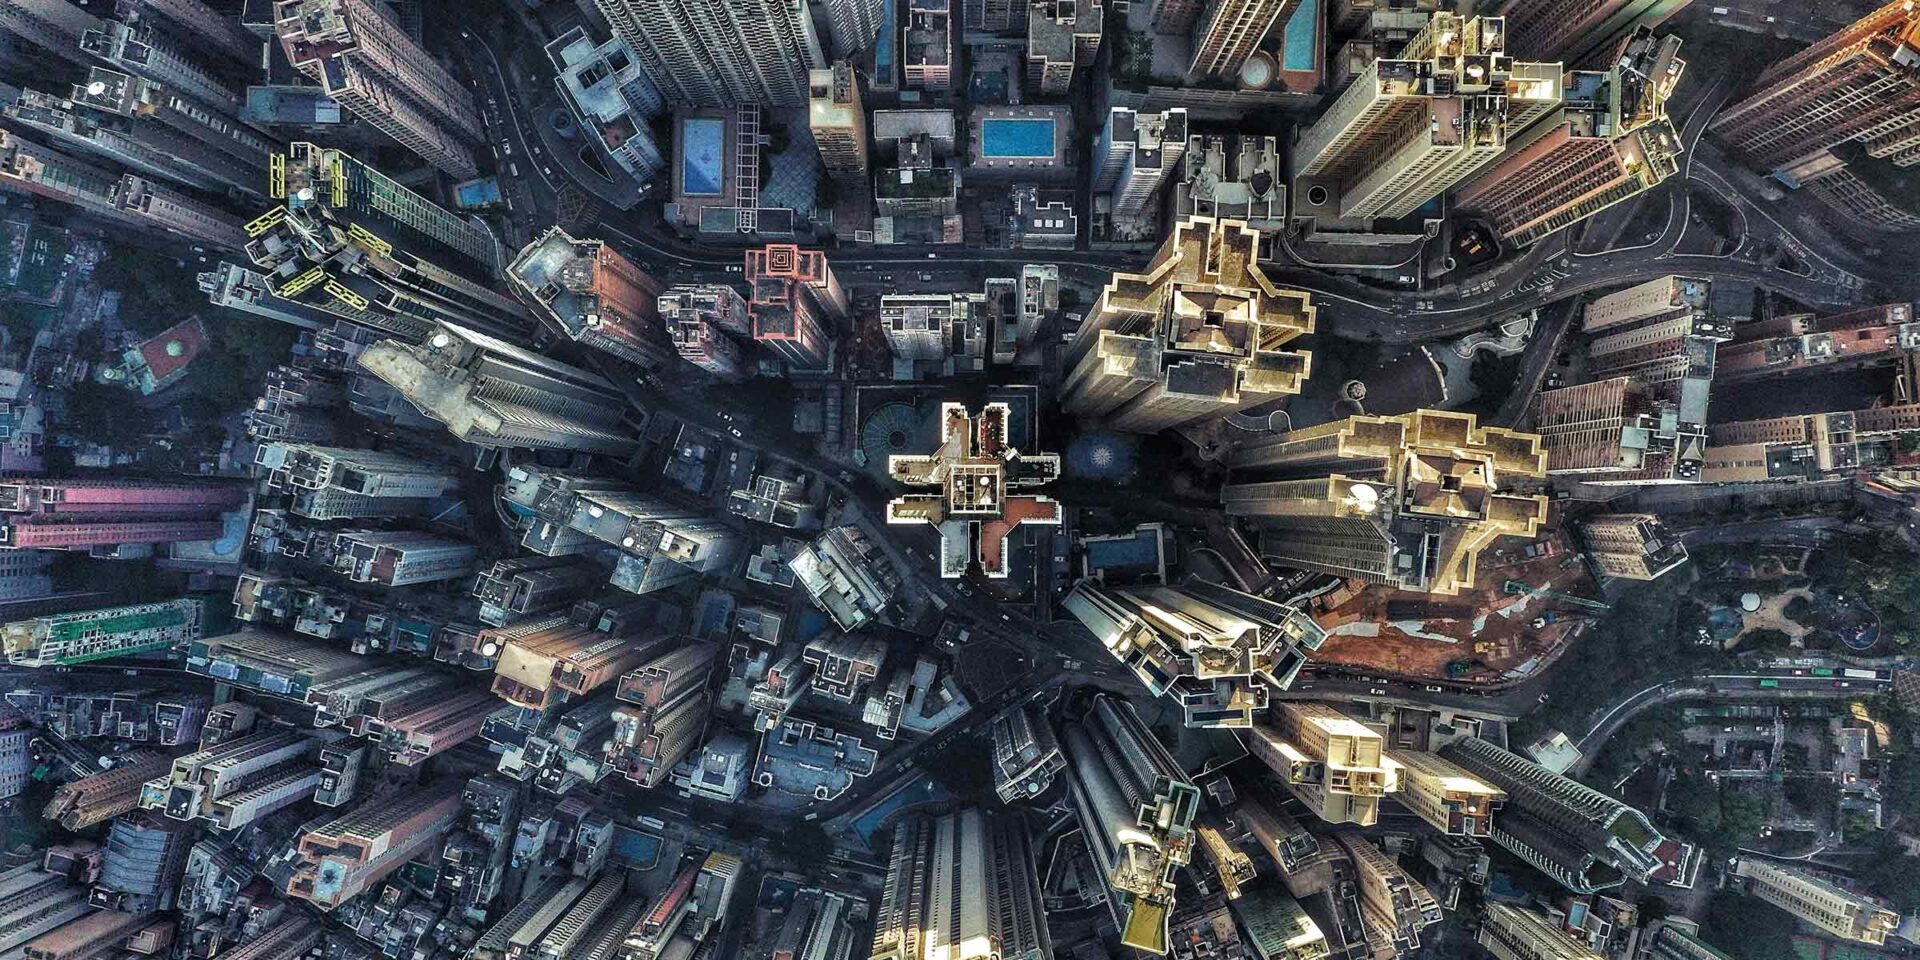 Aerial view of Hong Kong looking straight down at the city.